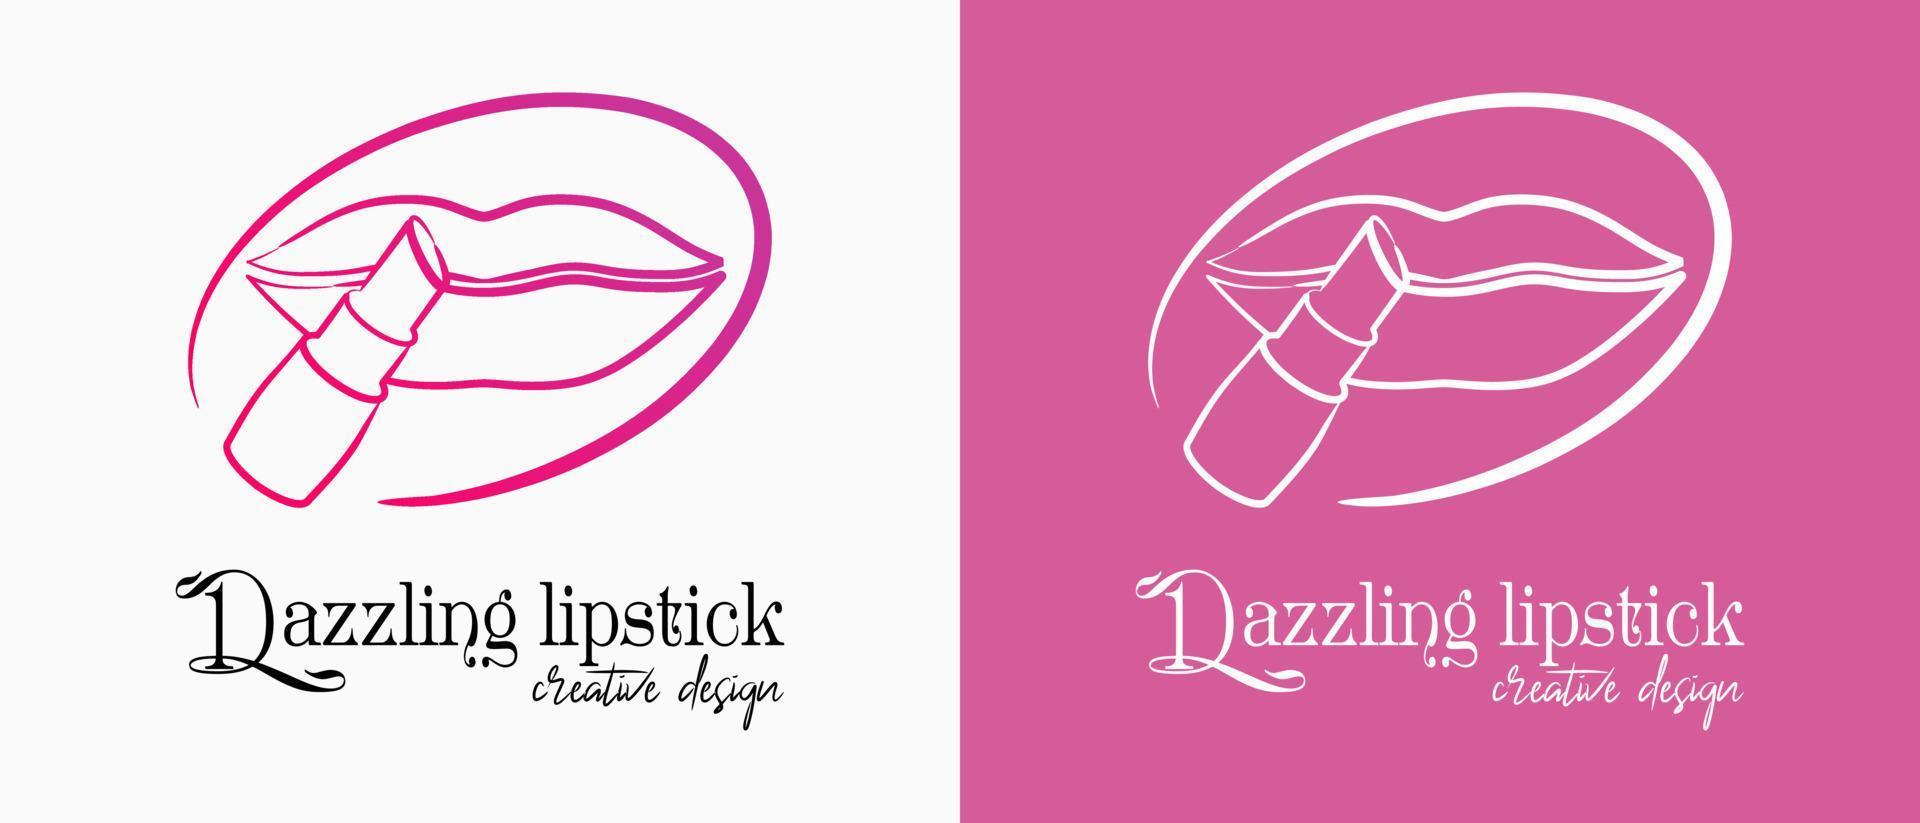 lipstick logo design with lips icon in line art concept. premium vector makeup or lifestyle logo illustration